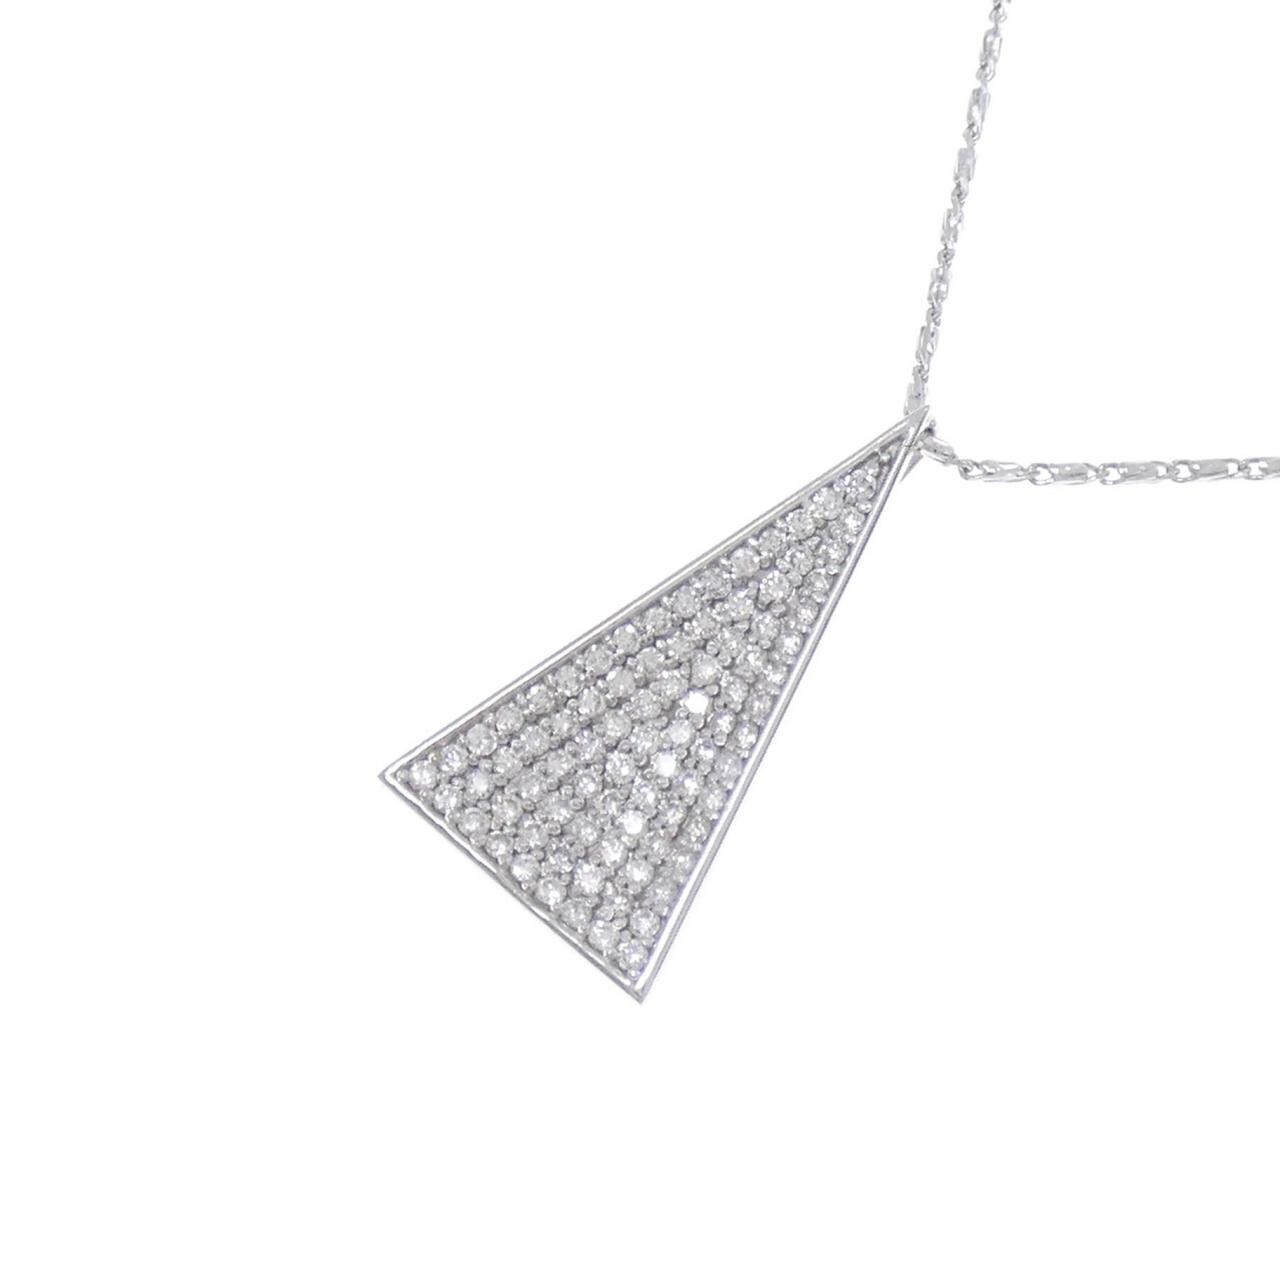 K18WG/750WG Diamond necklace 0.70CT